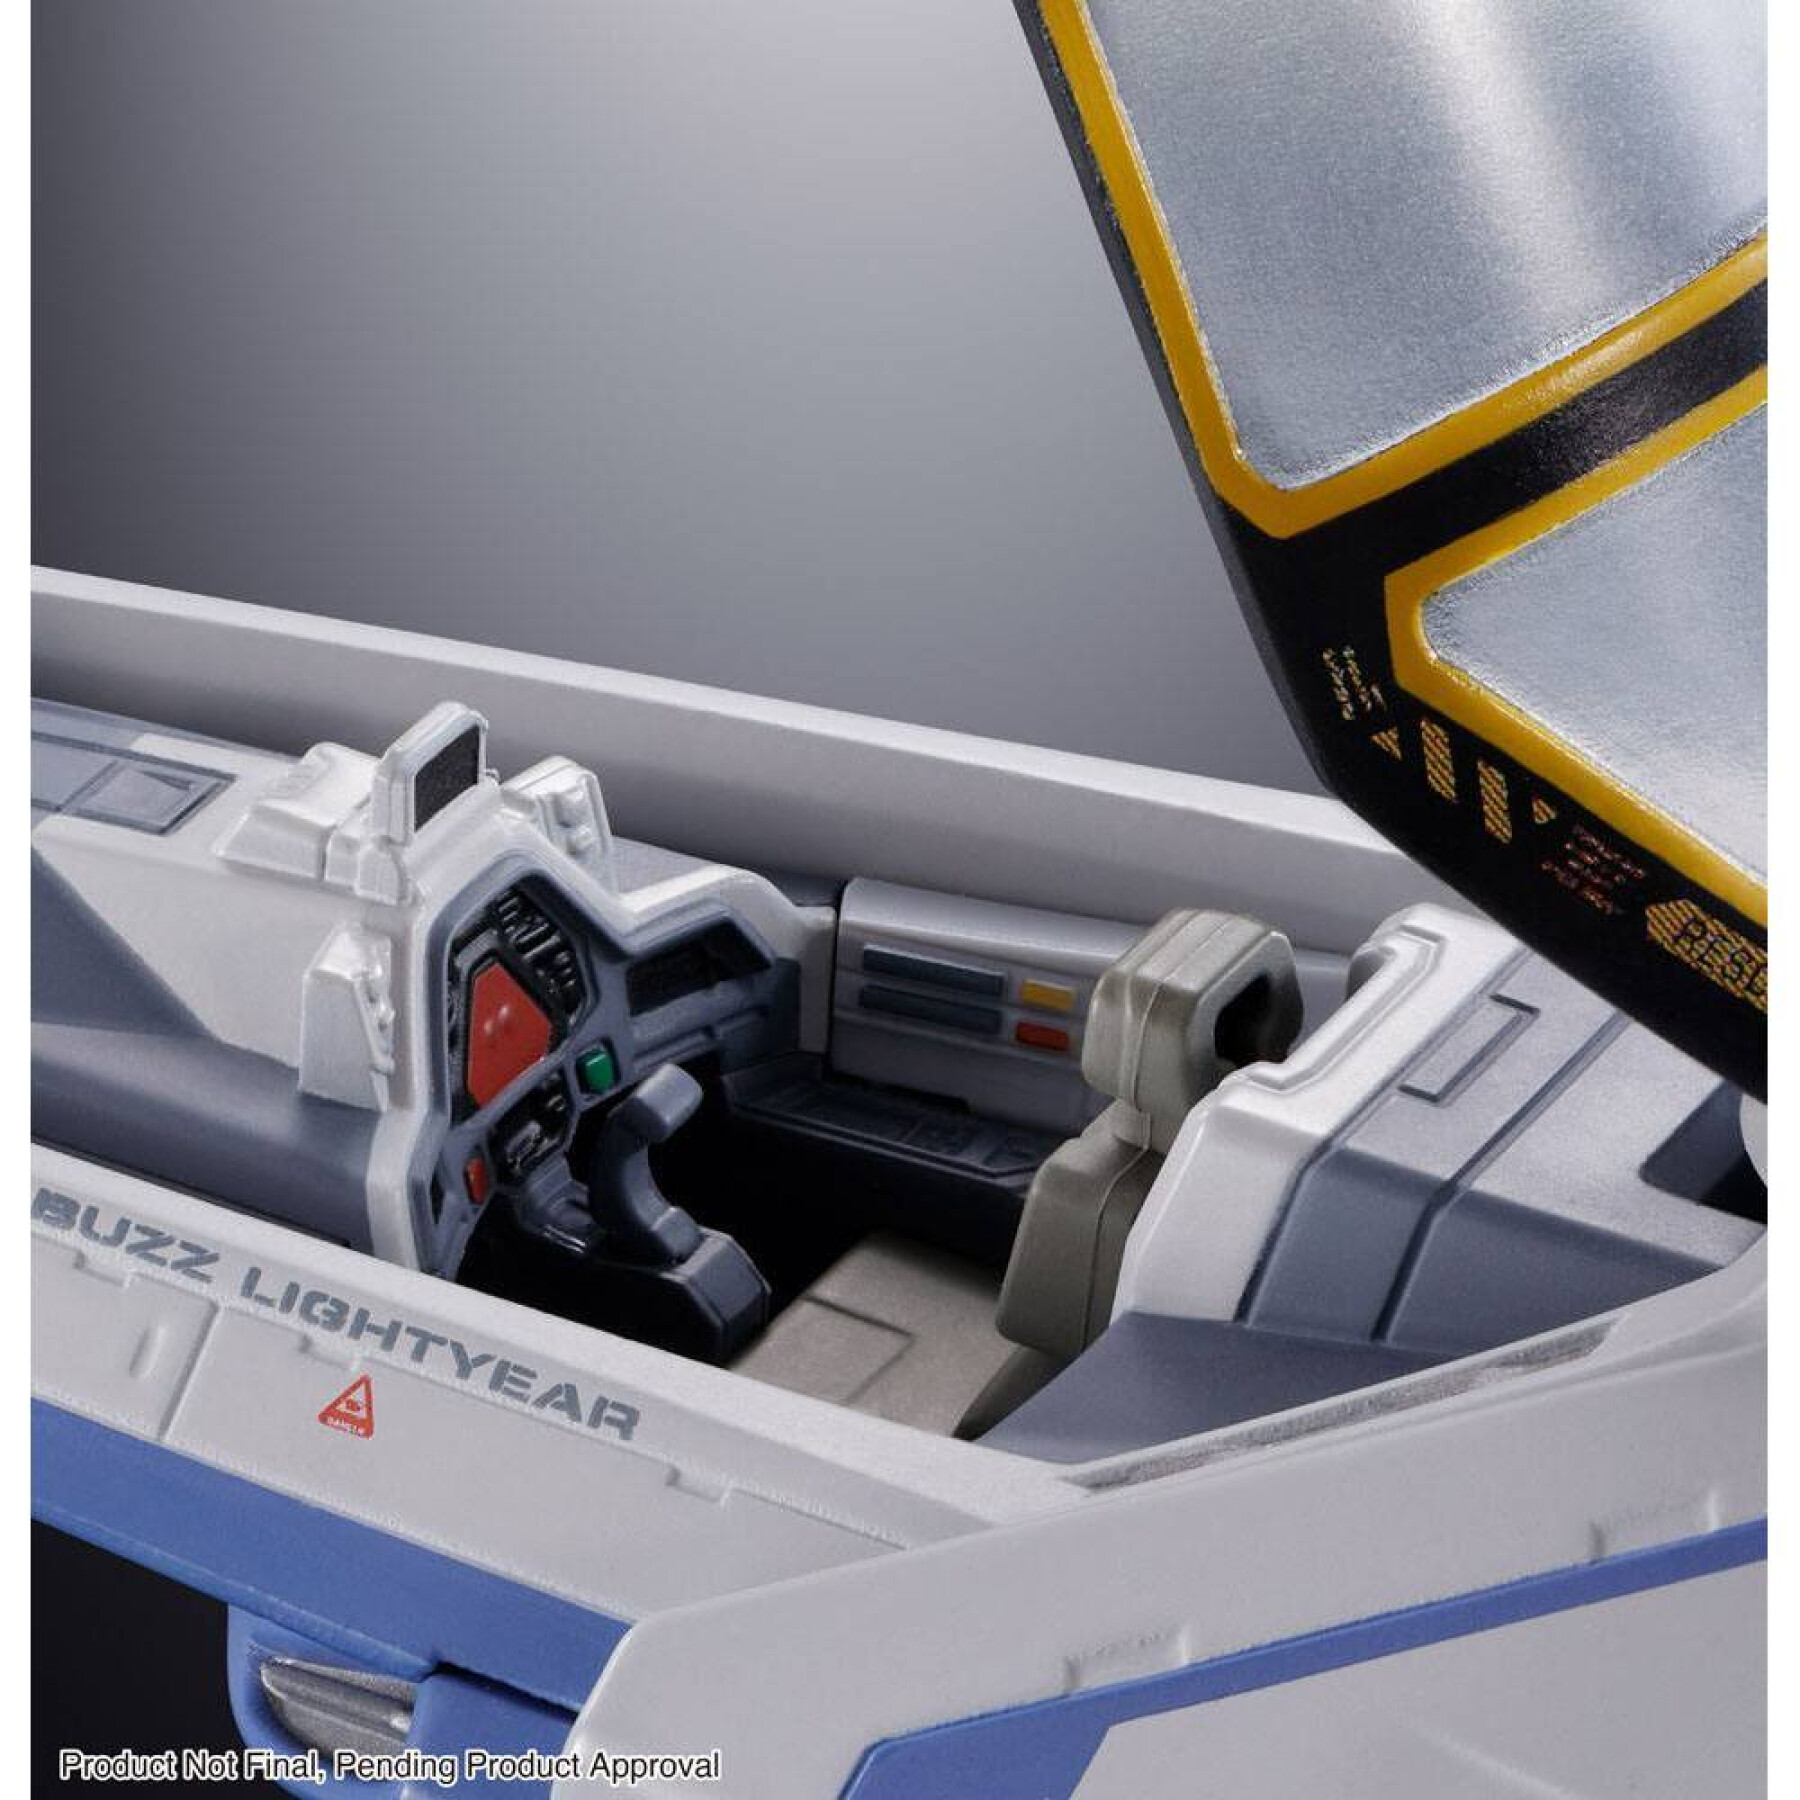 Figurina Bandai Lightyear vaisseau spatial Chogokin XL-15 Space Ship